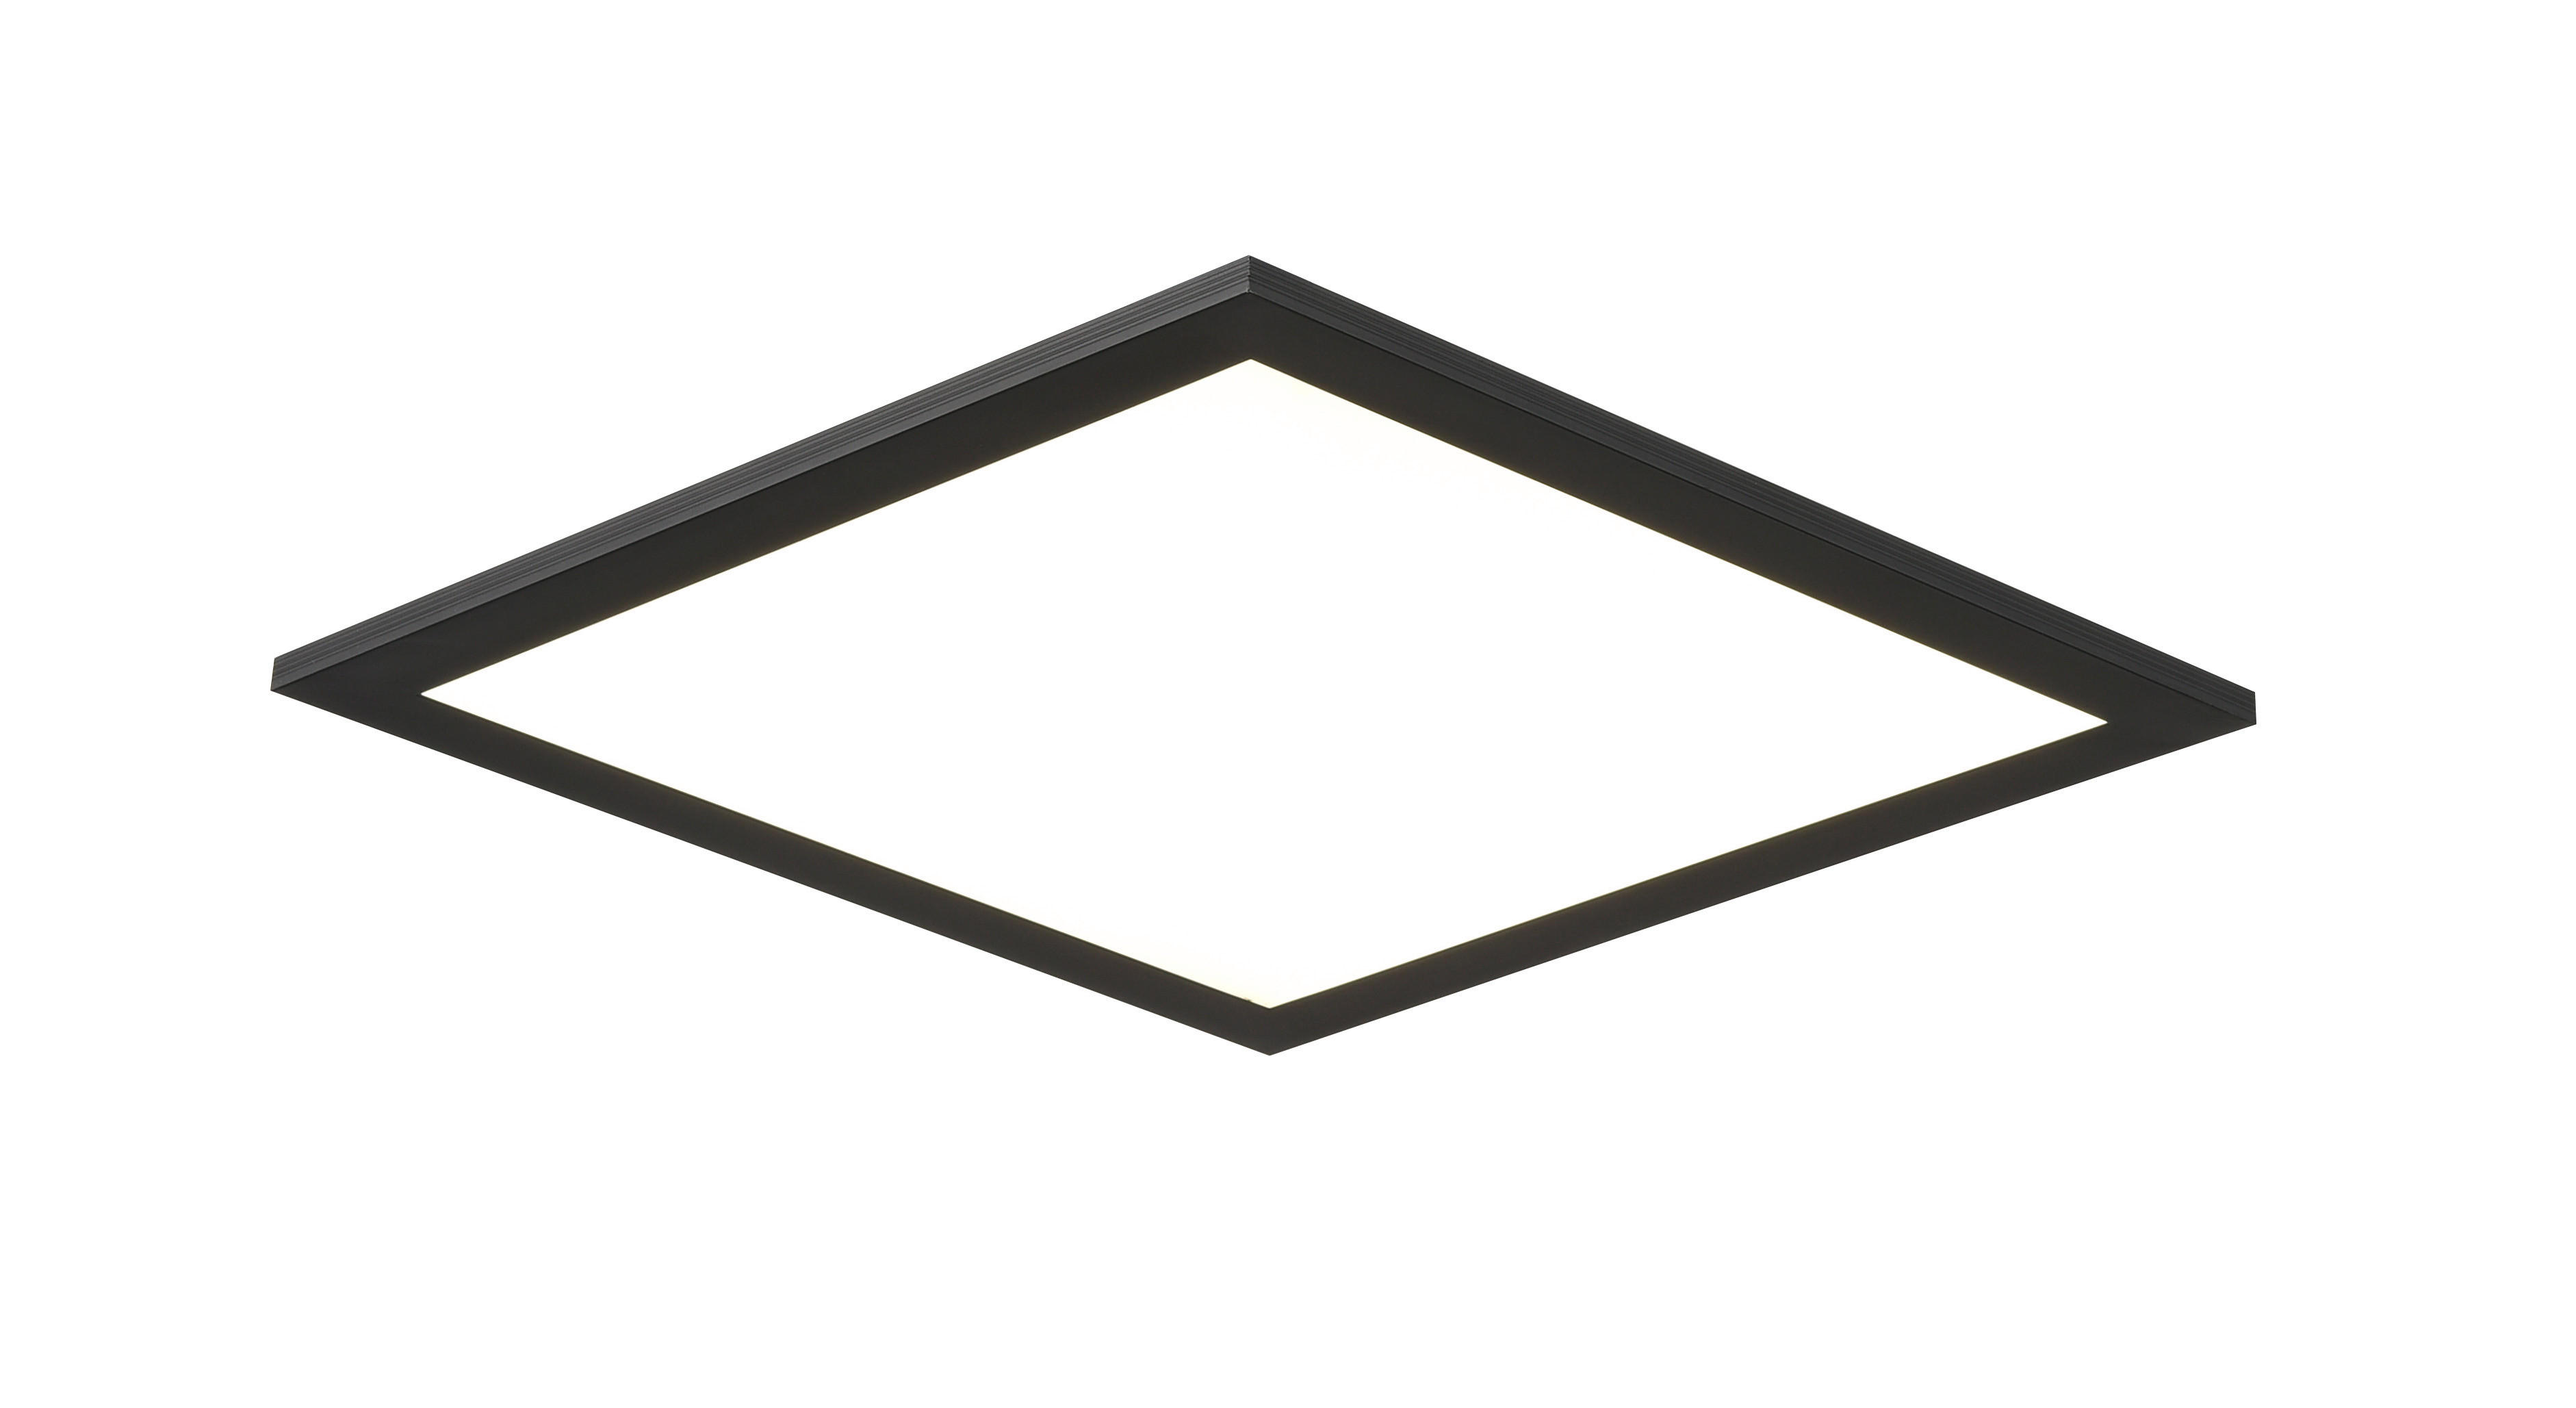 LED-PANEEL 30/30/4,5 cm  - Schwarz/Weiß, Basics, Kunststoff/Metall (30/30/4,5cm) - Novel